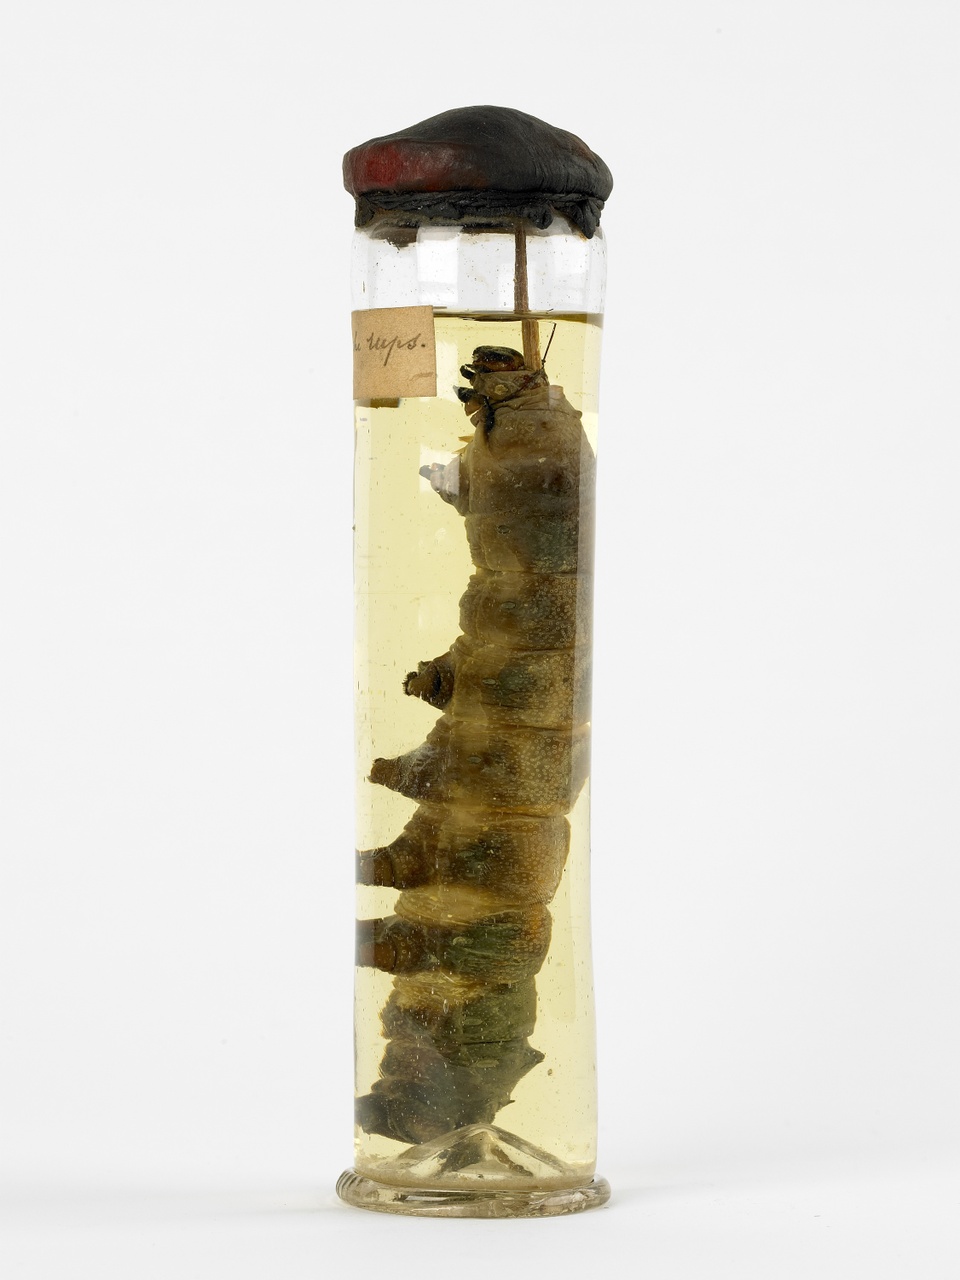 Goliathus goliathus (Linneaus, 1771), Goliathkever, alcoholpreparaat